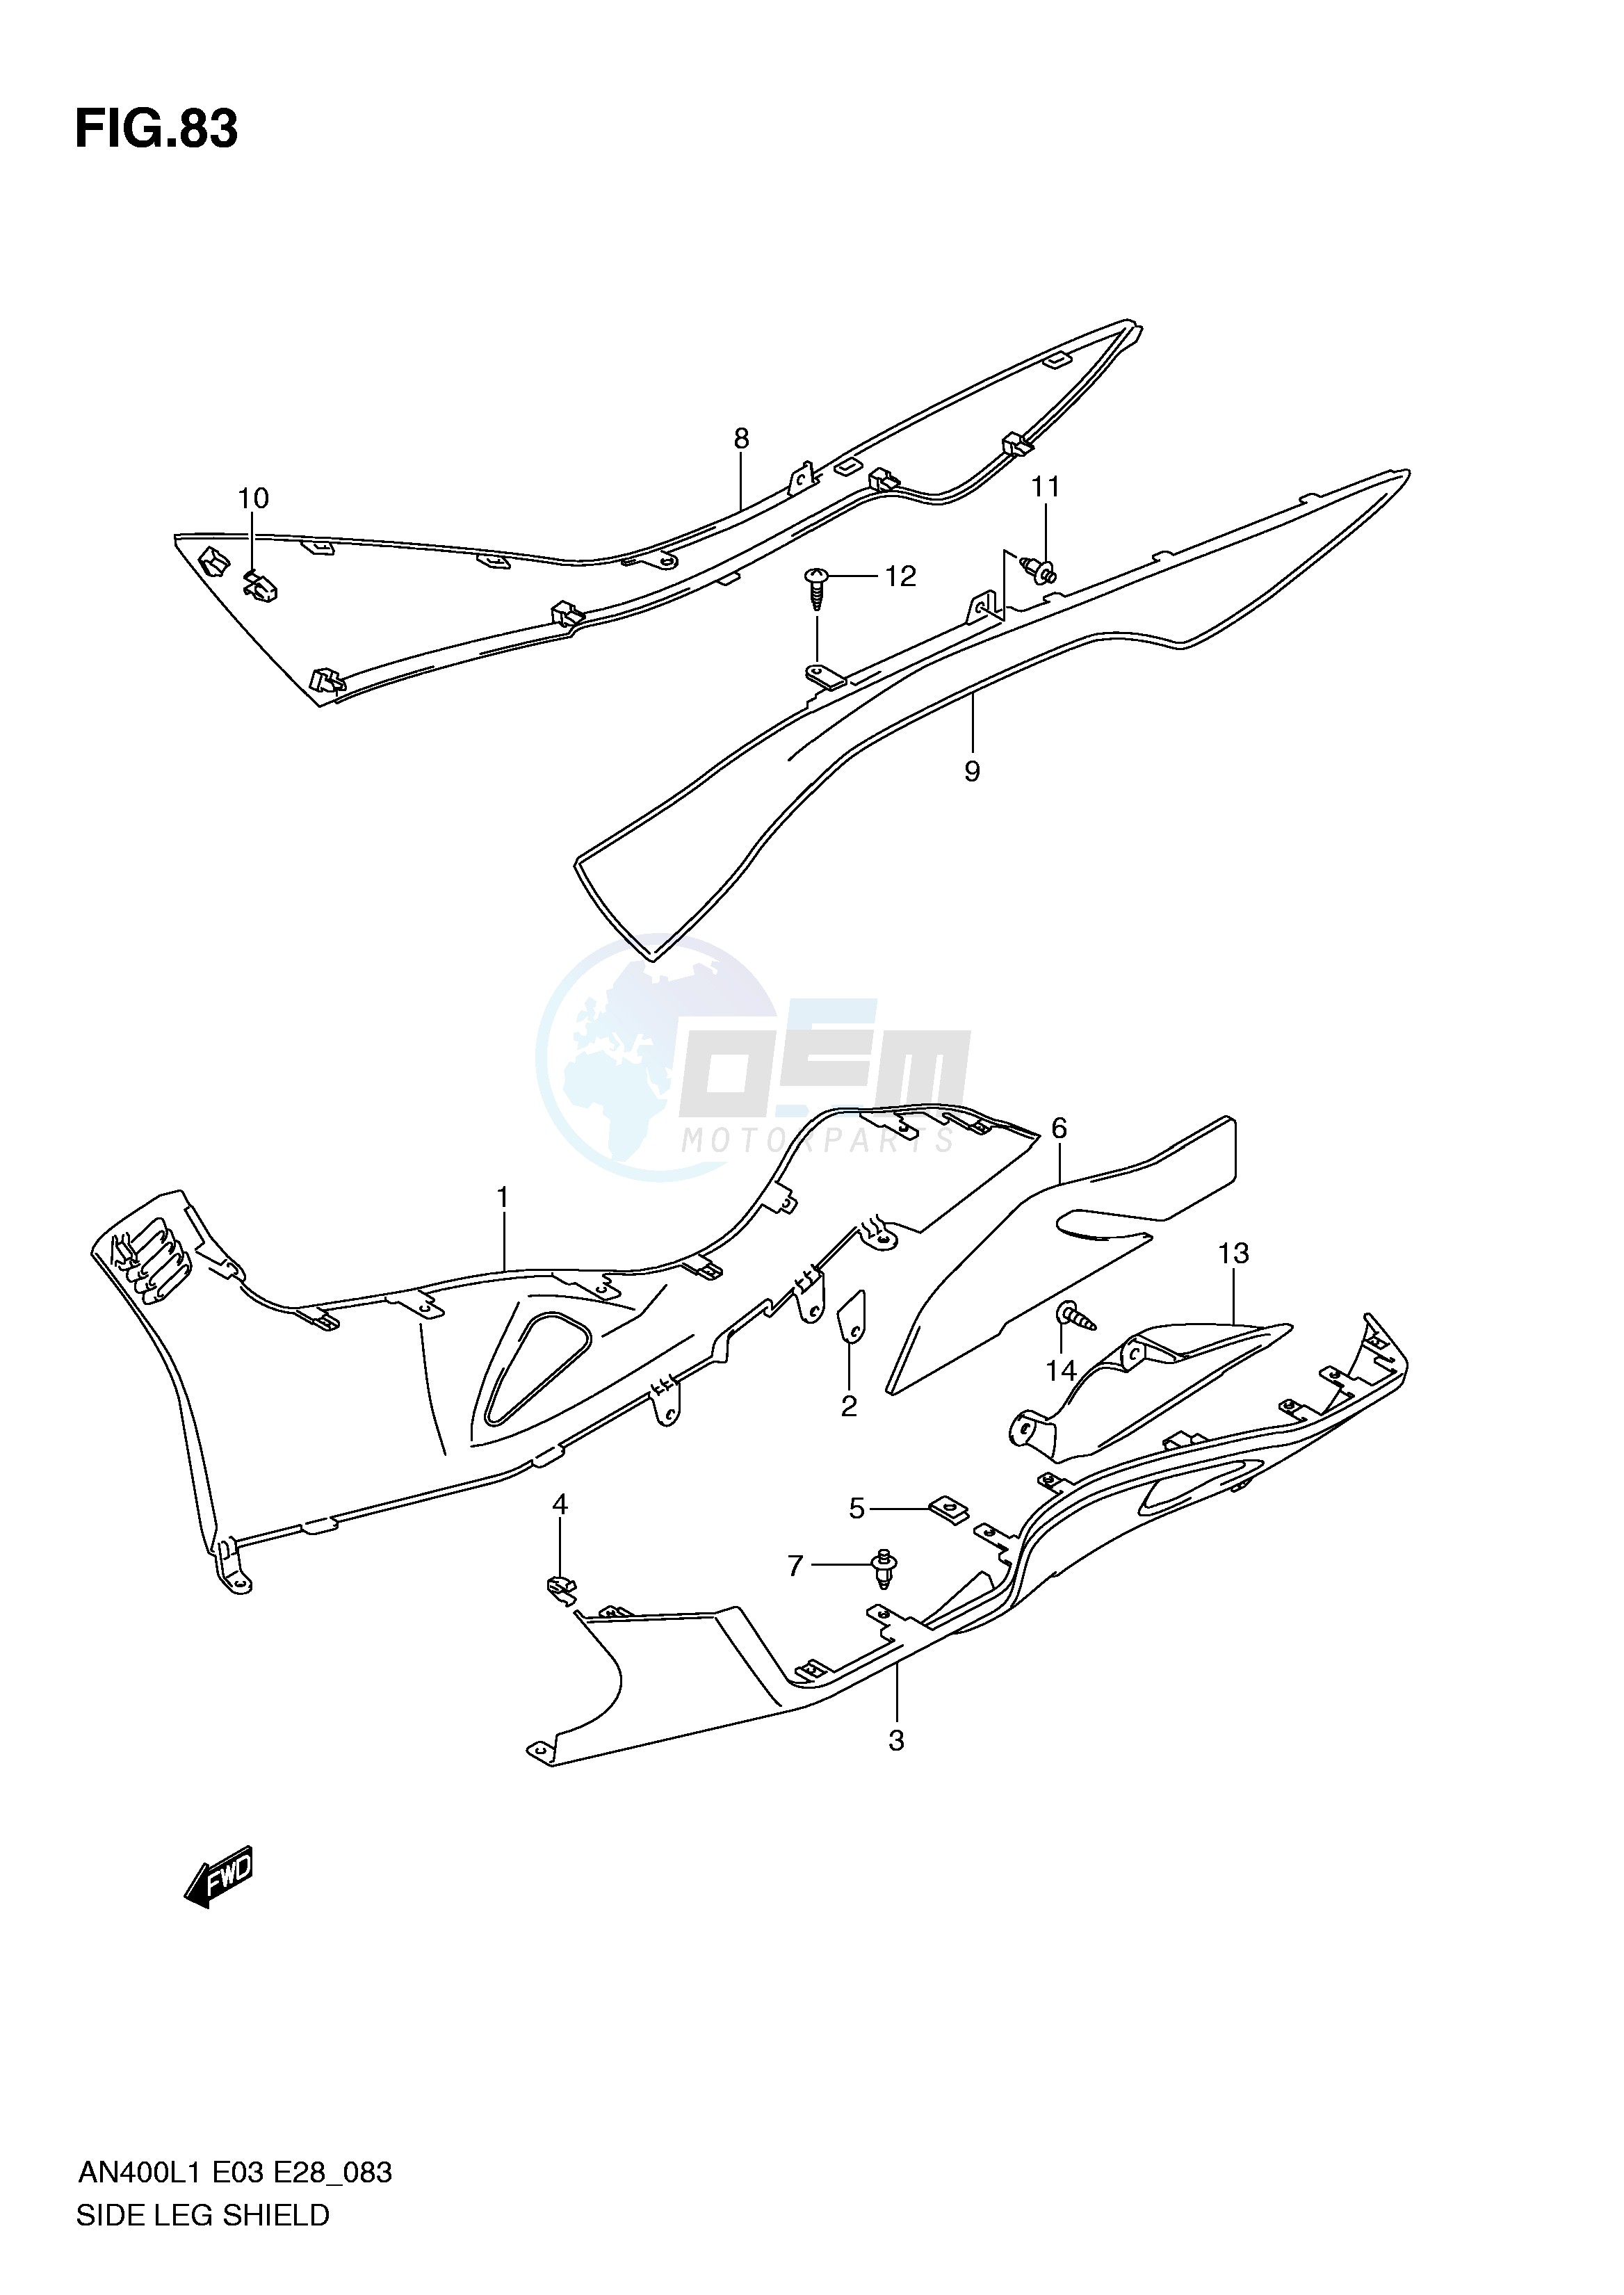 SIDE LEG SHIELD (AN400L1 E33) blueprint